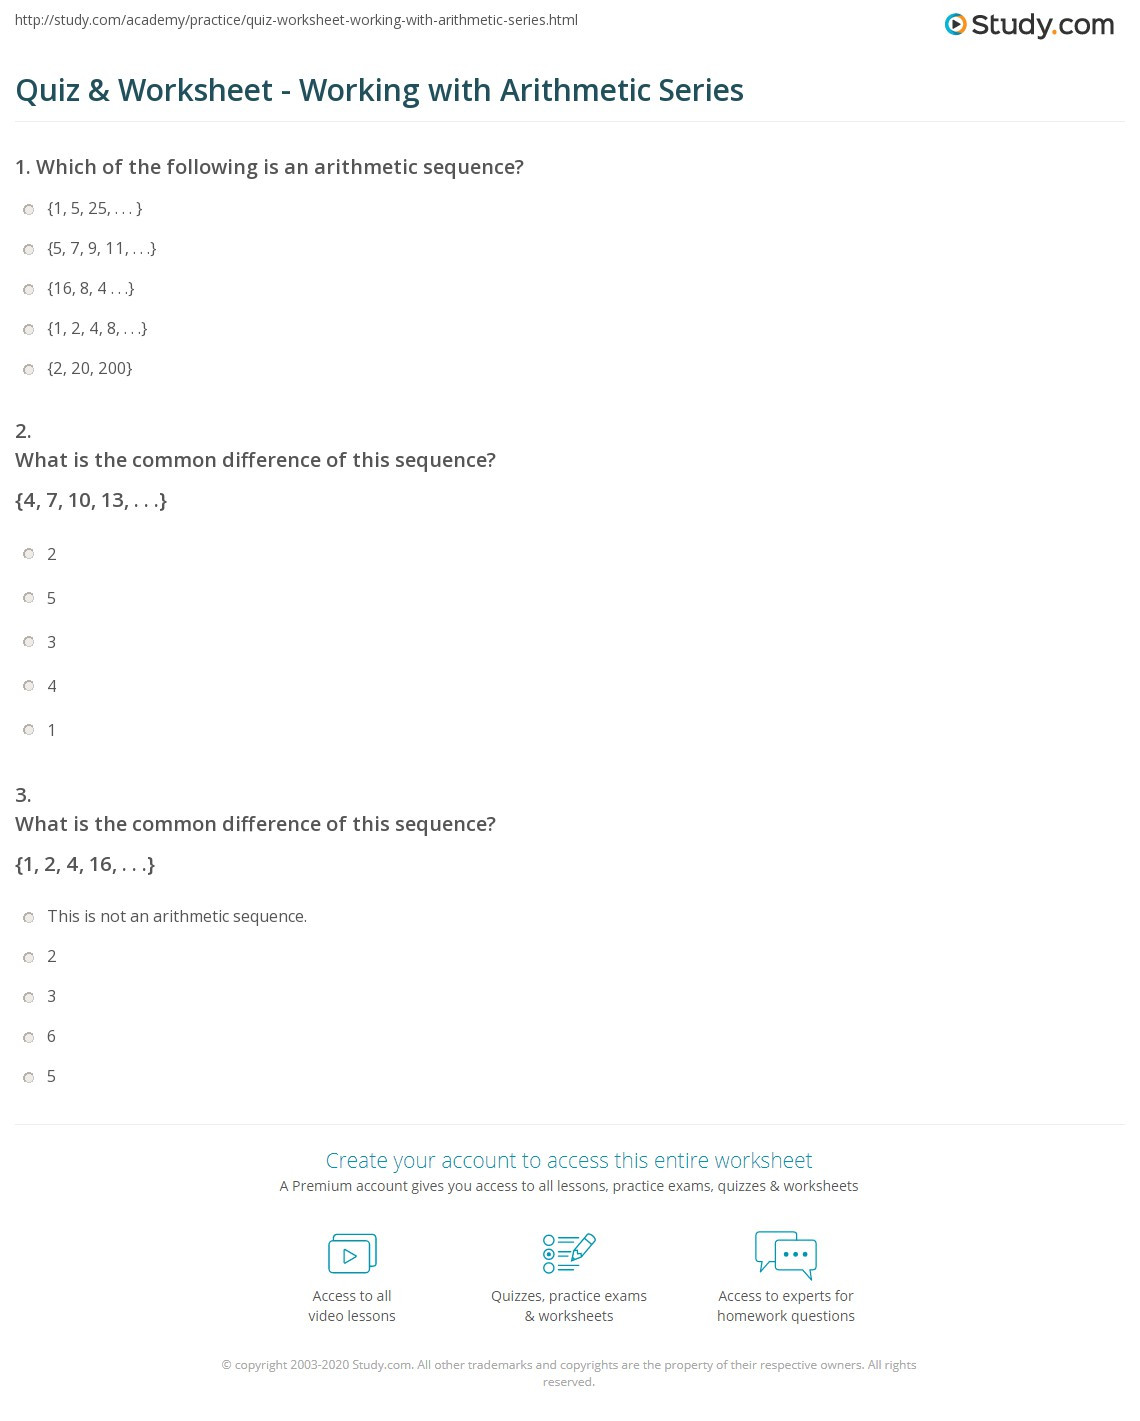 Arithmetic Sequence Worksheet Algebra 1 Quiz &amp; Worksheet Working with Arithmetic Series